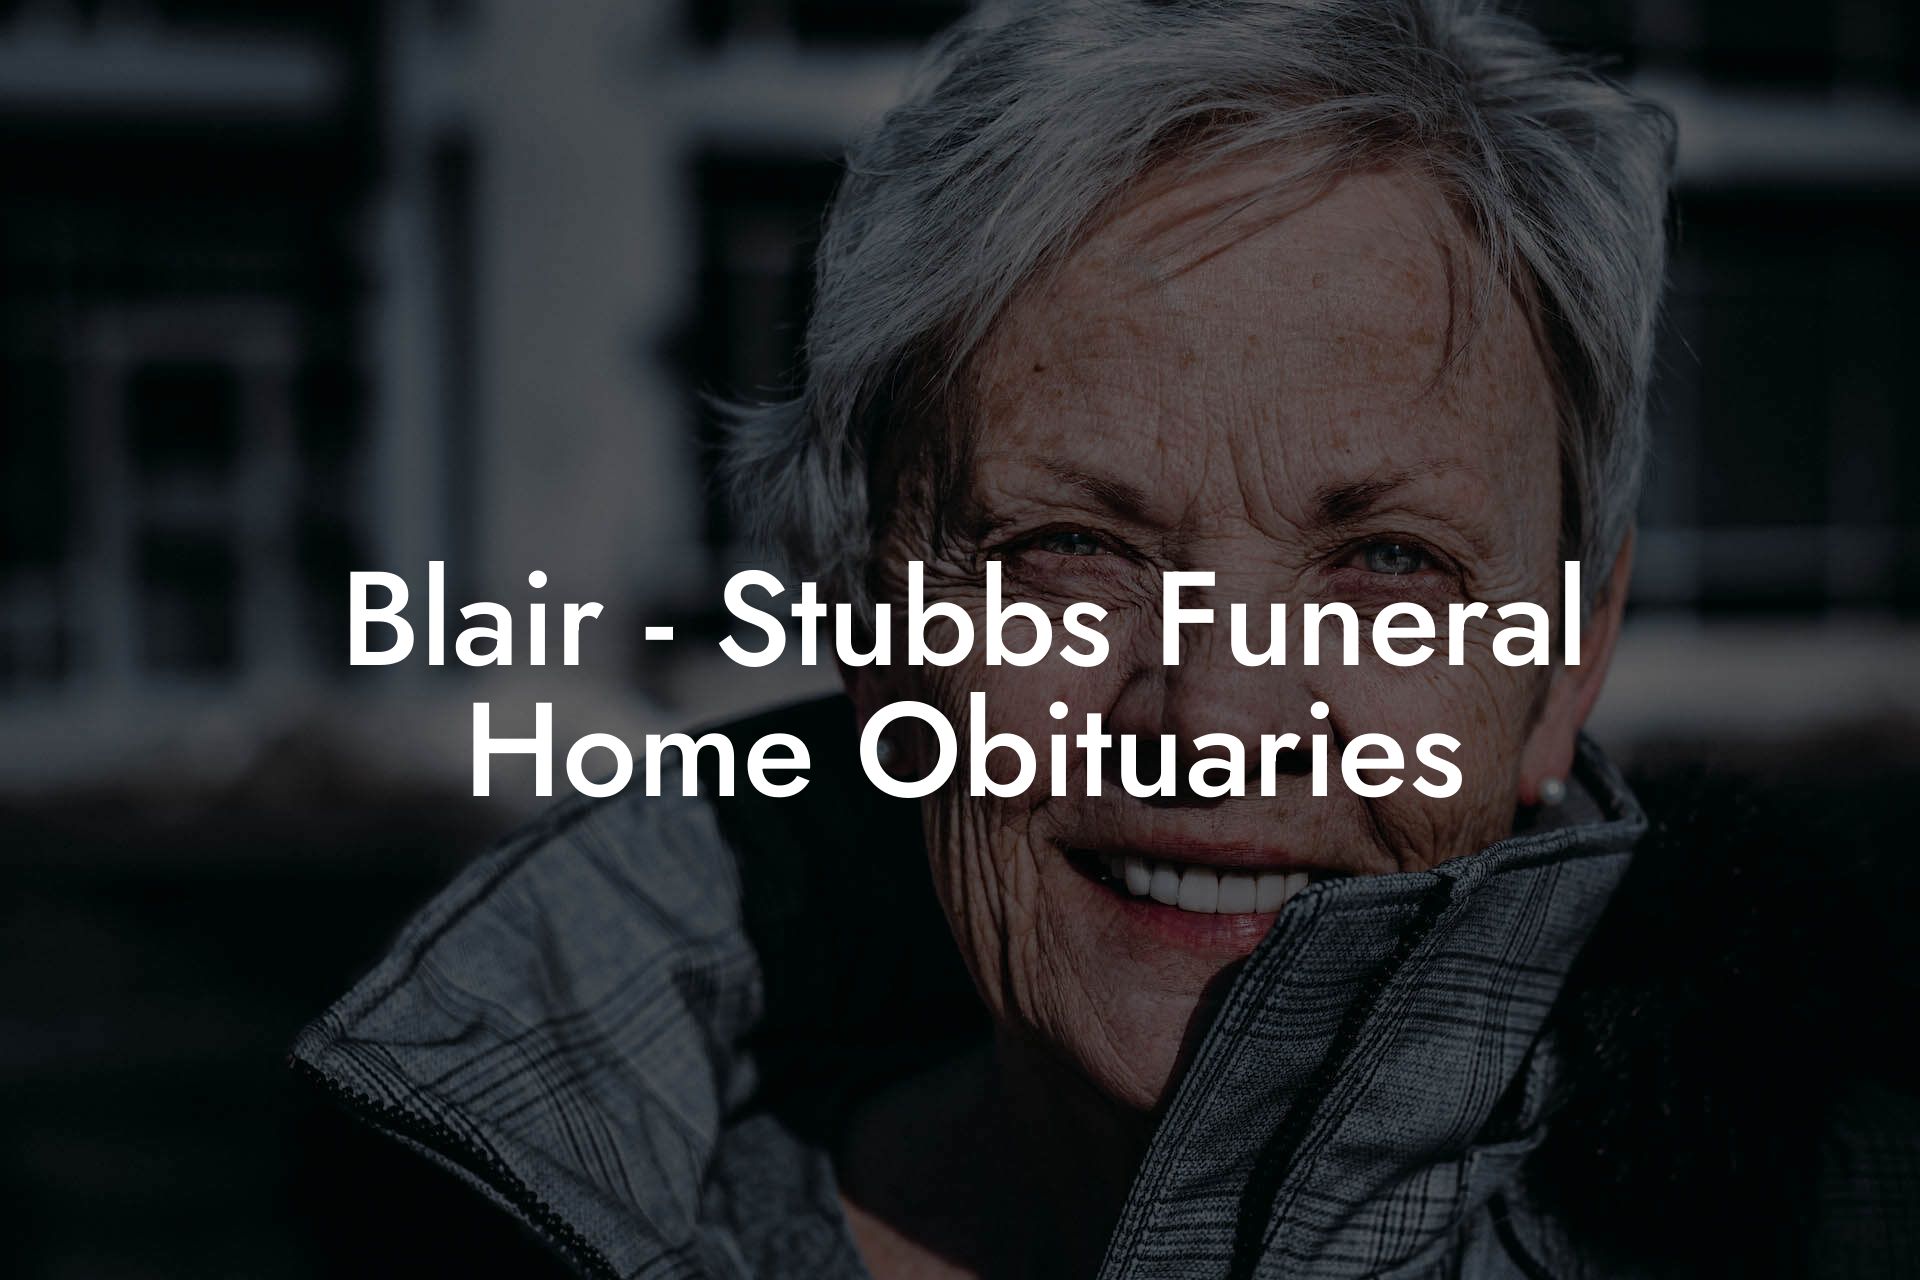 Blair - Stubbs Funeral Home Obituaries